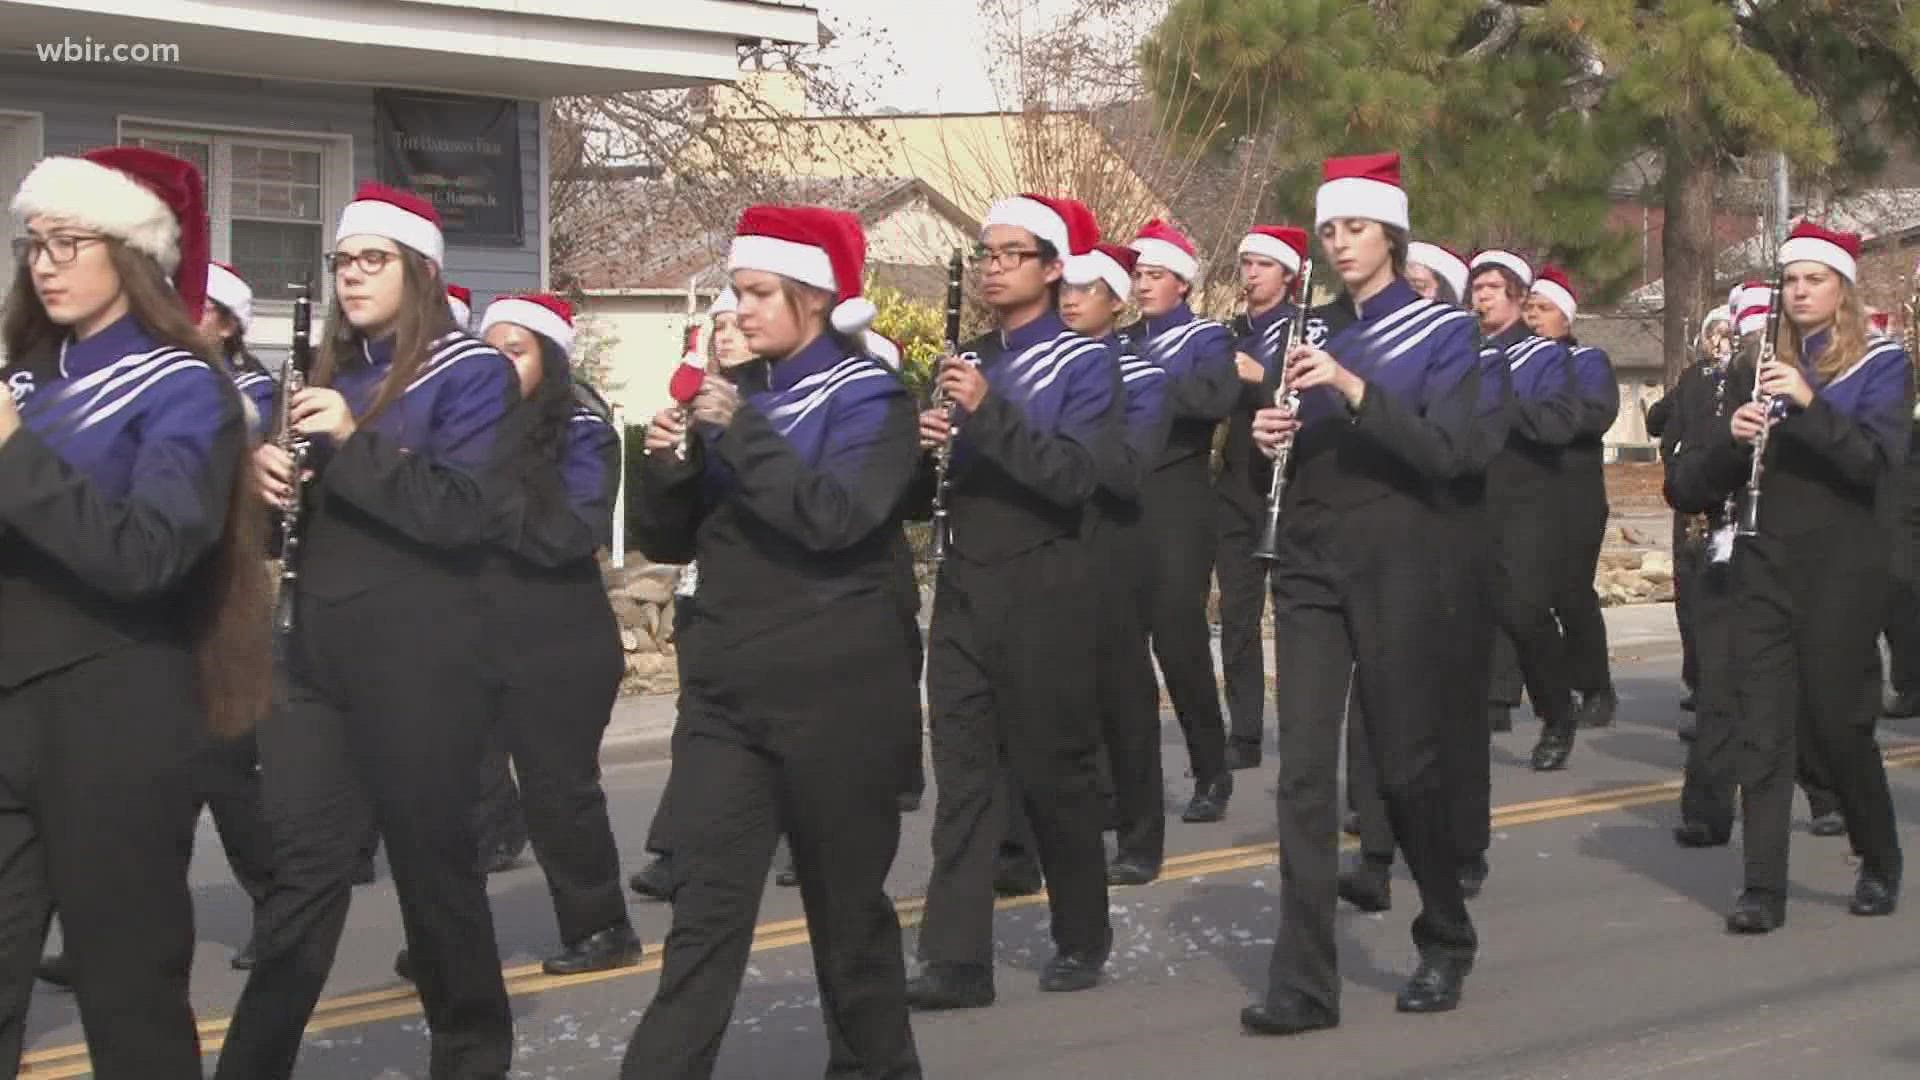 Sevierville Christmas Parade kicks off Saturday morning, bringing in